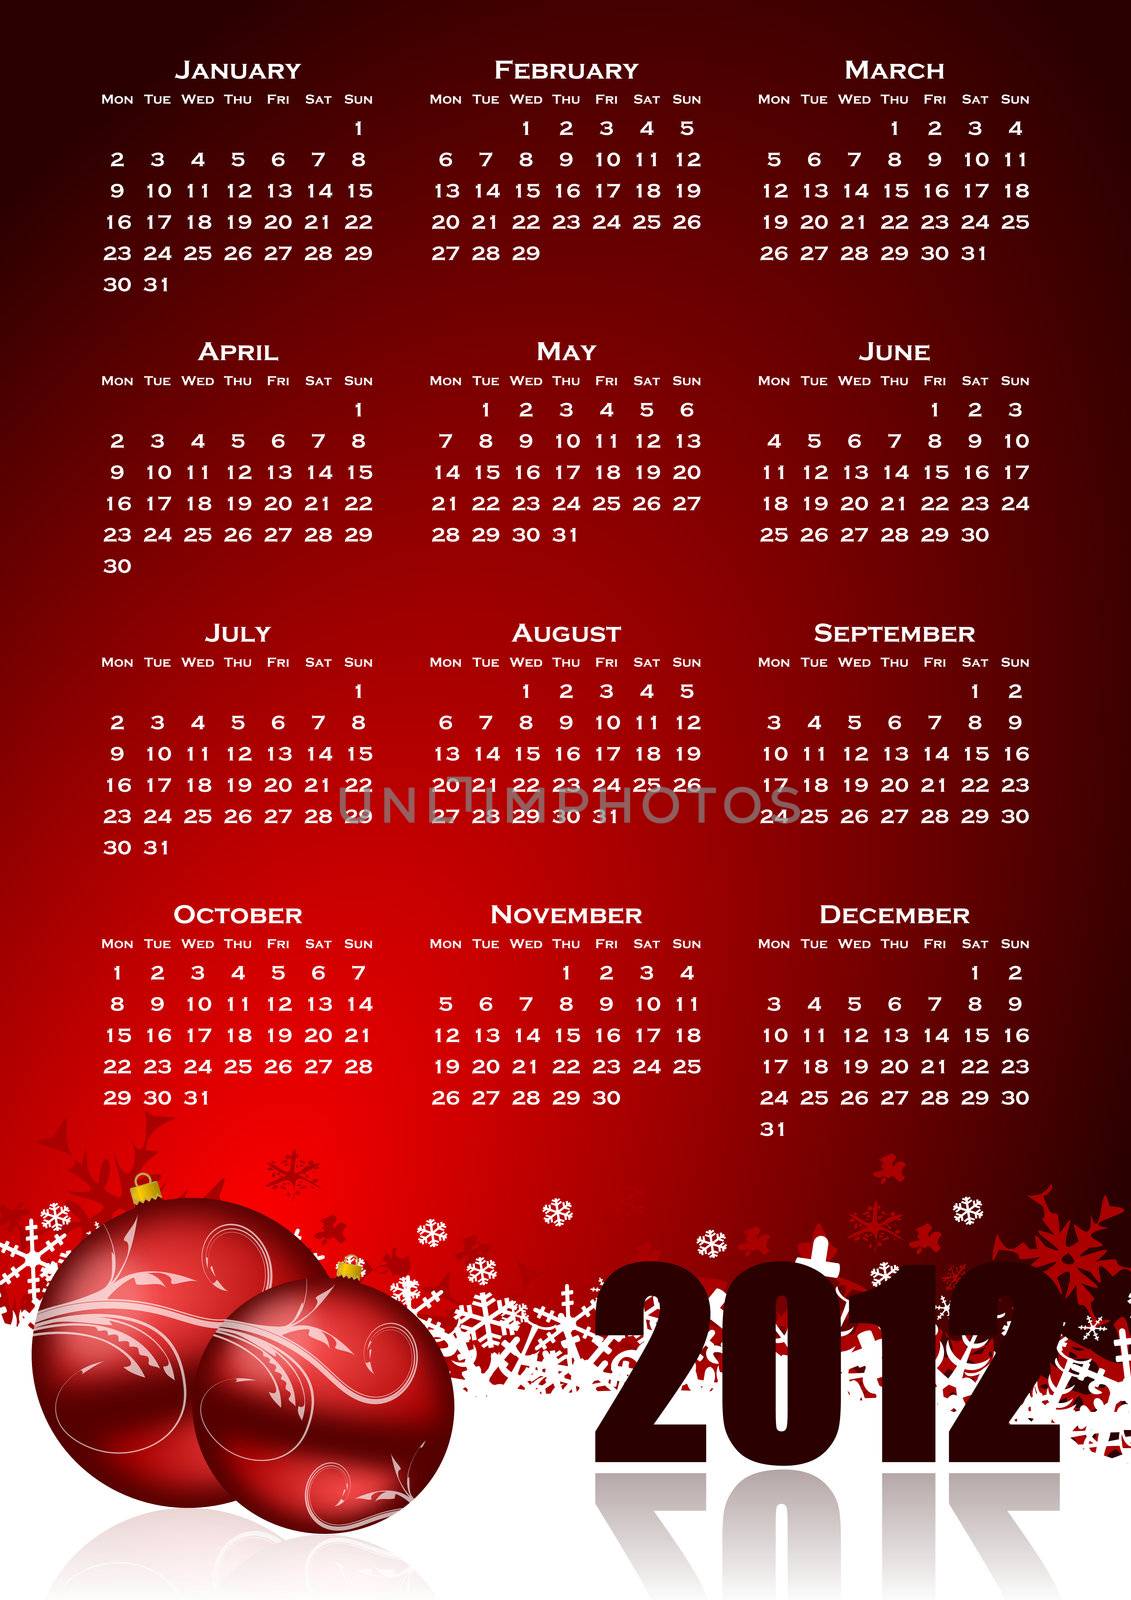 calendar for 2012 year by alexwhite